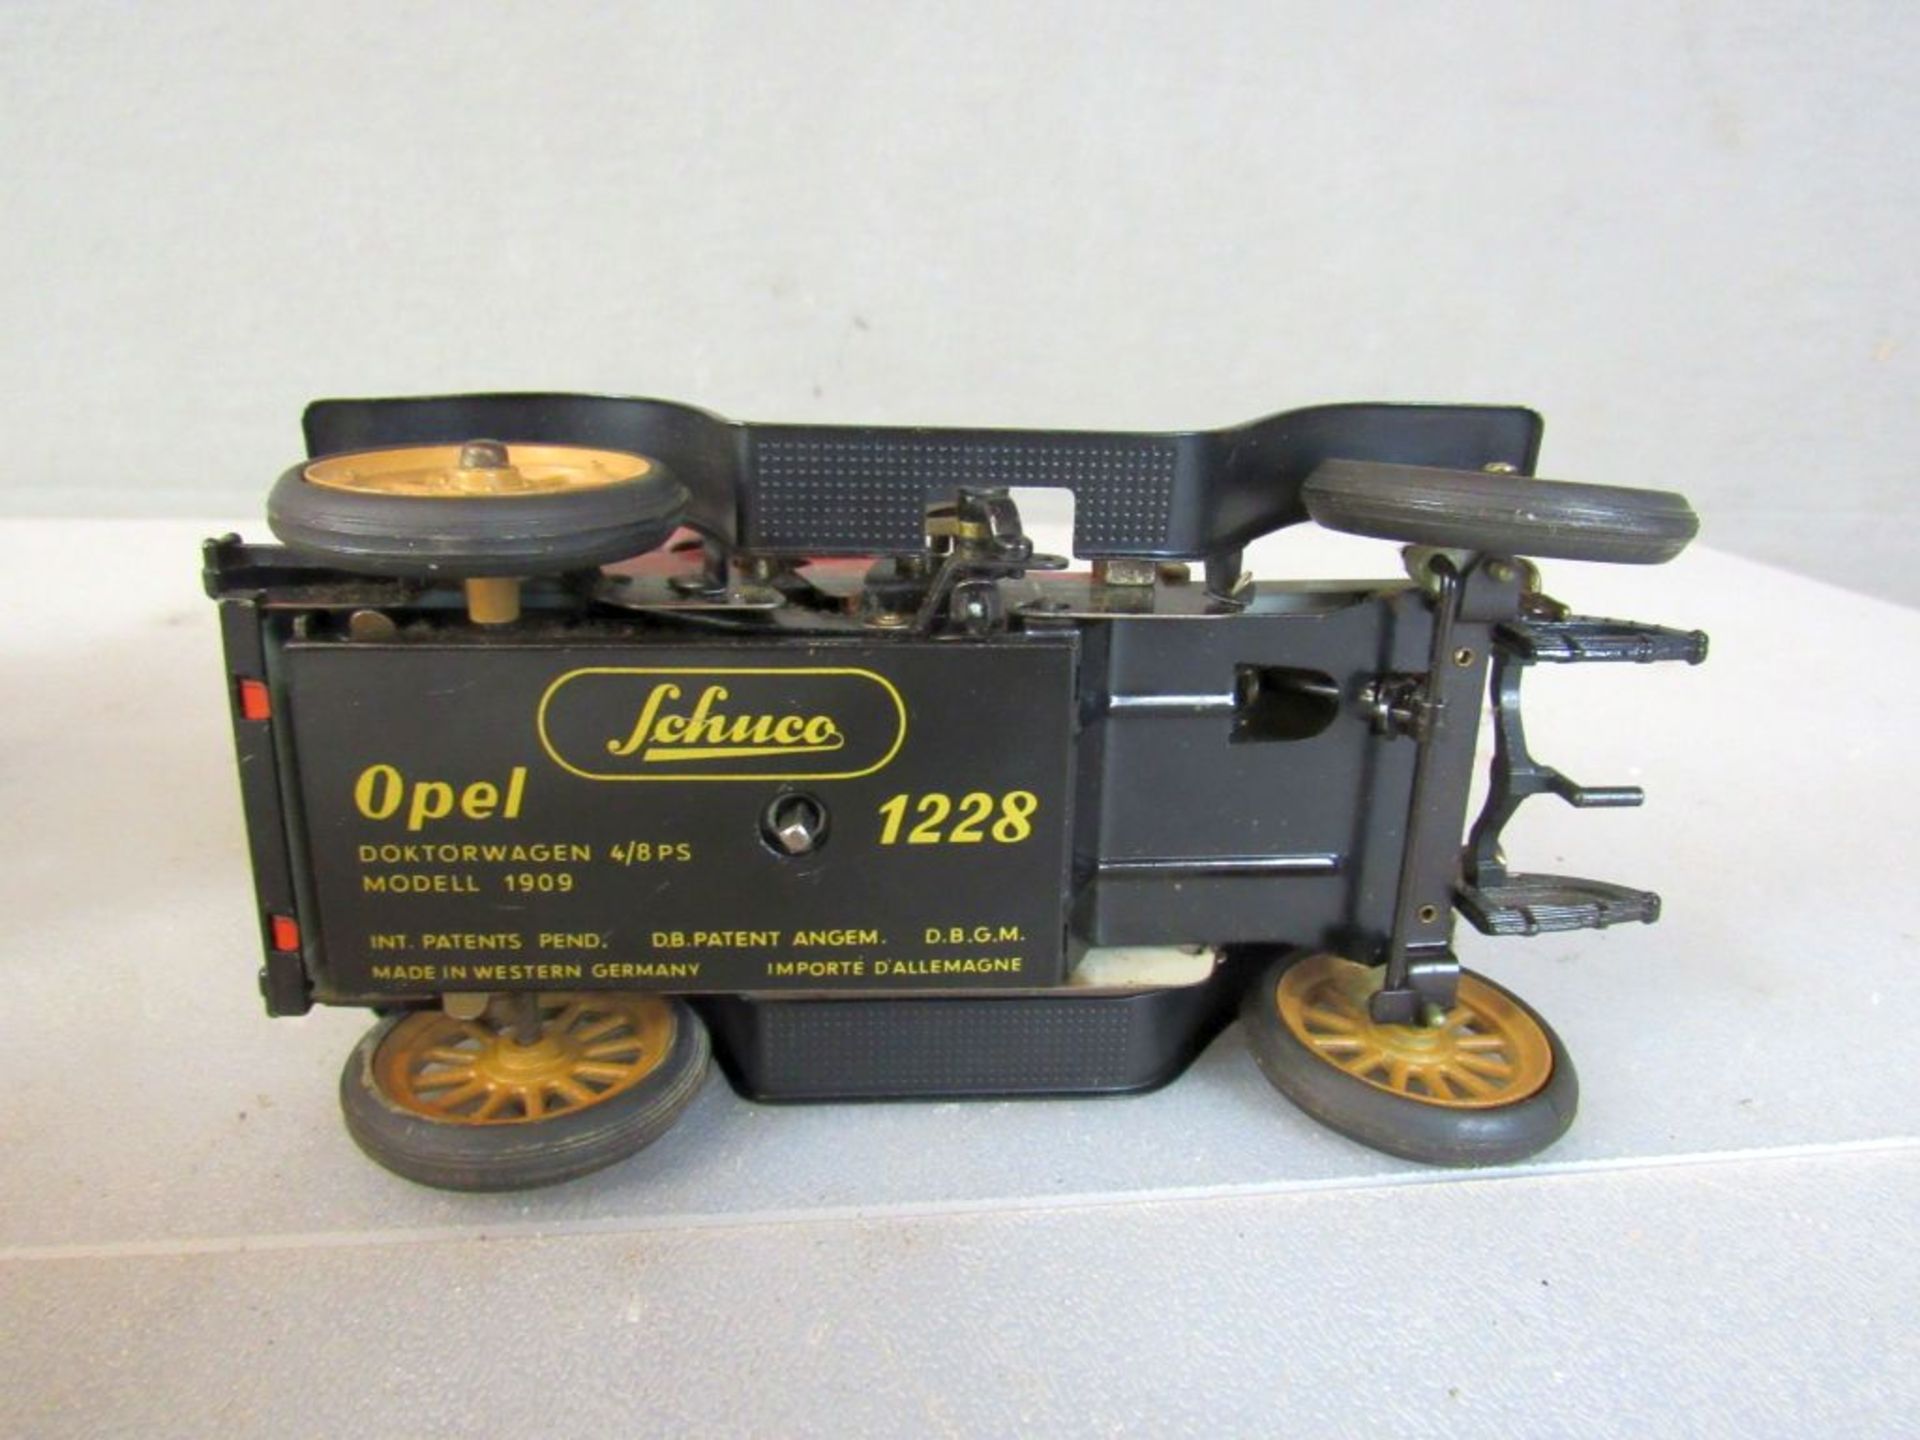 Spielzeug Schuco Modell 1228 Oldtimer - Image 10 of 10